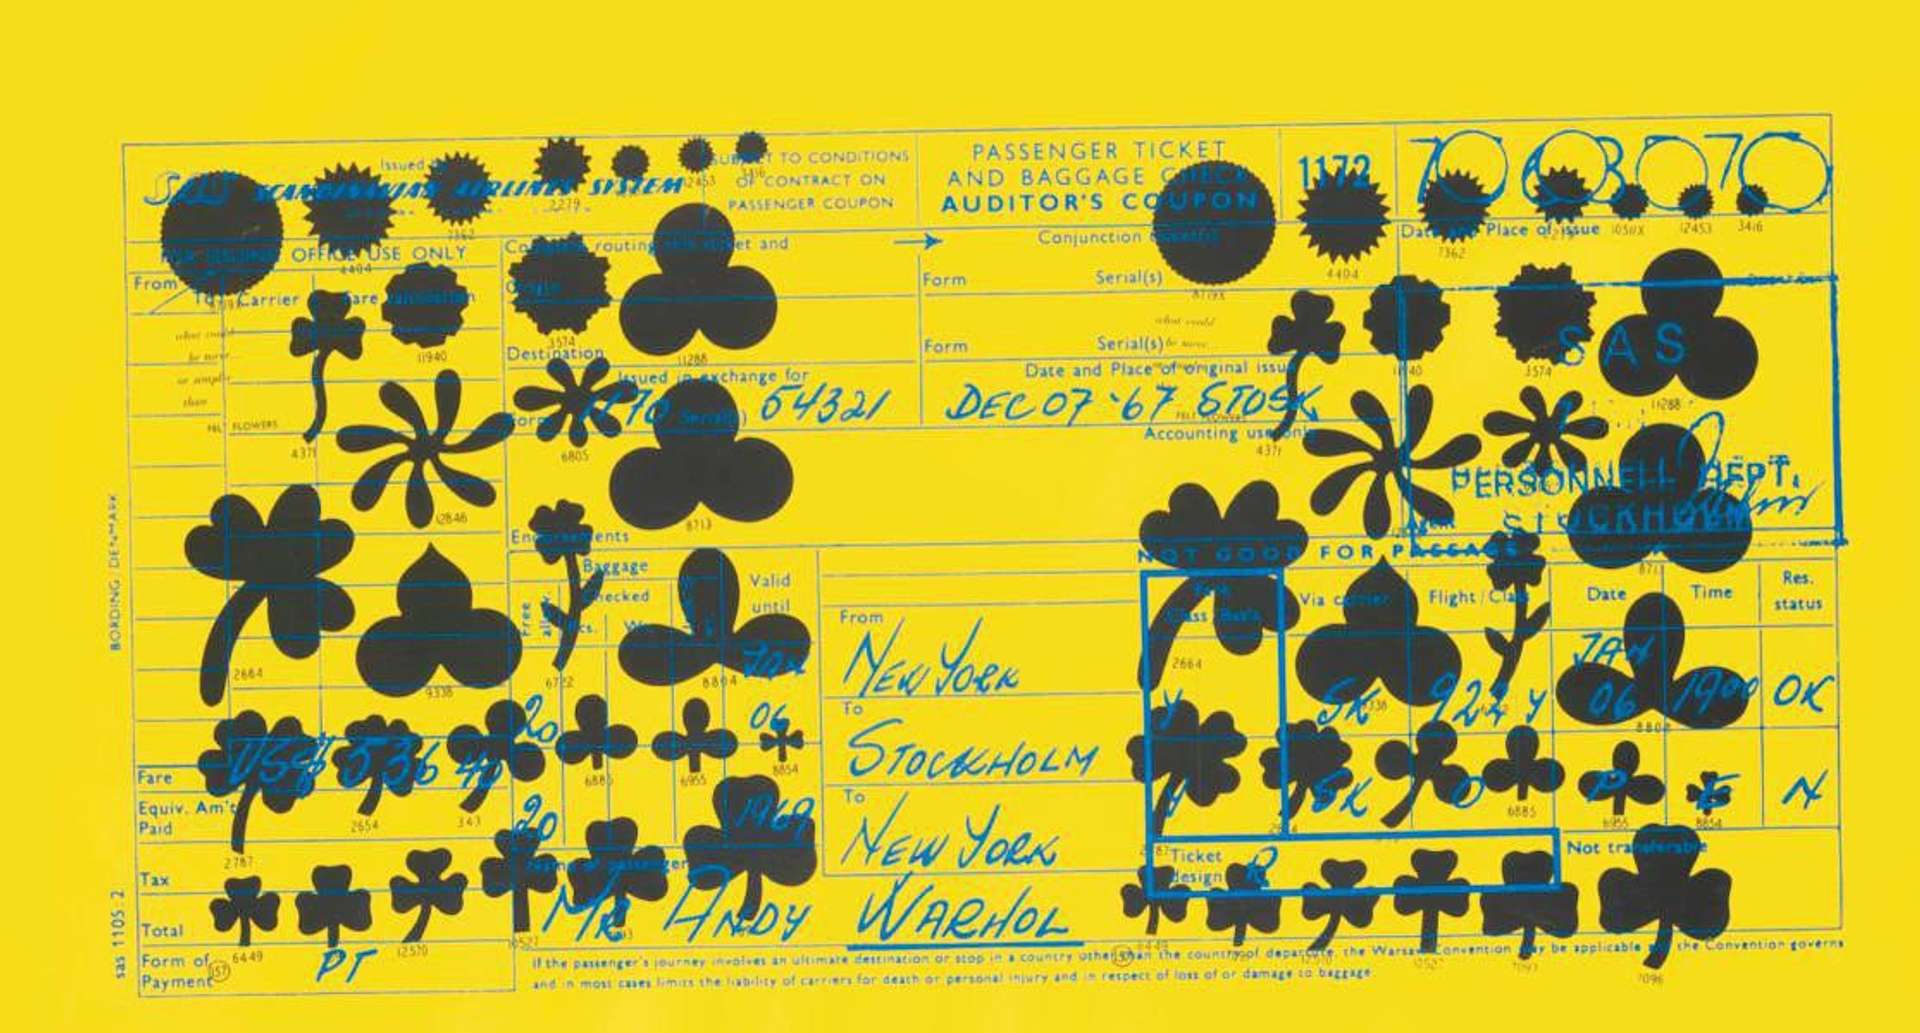 Andy Warhol: Sas Passenger Ticket (F. & S. II.20) - Signed Print